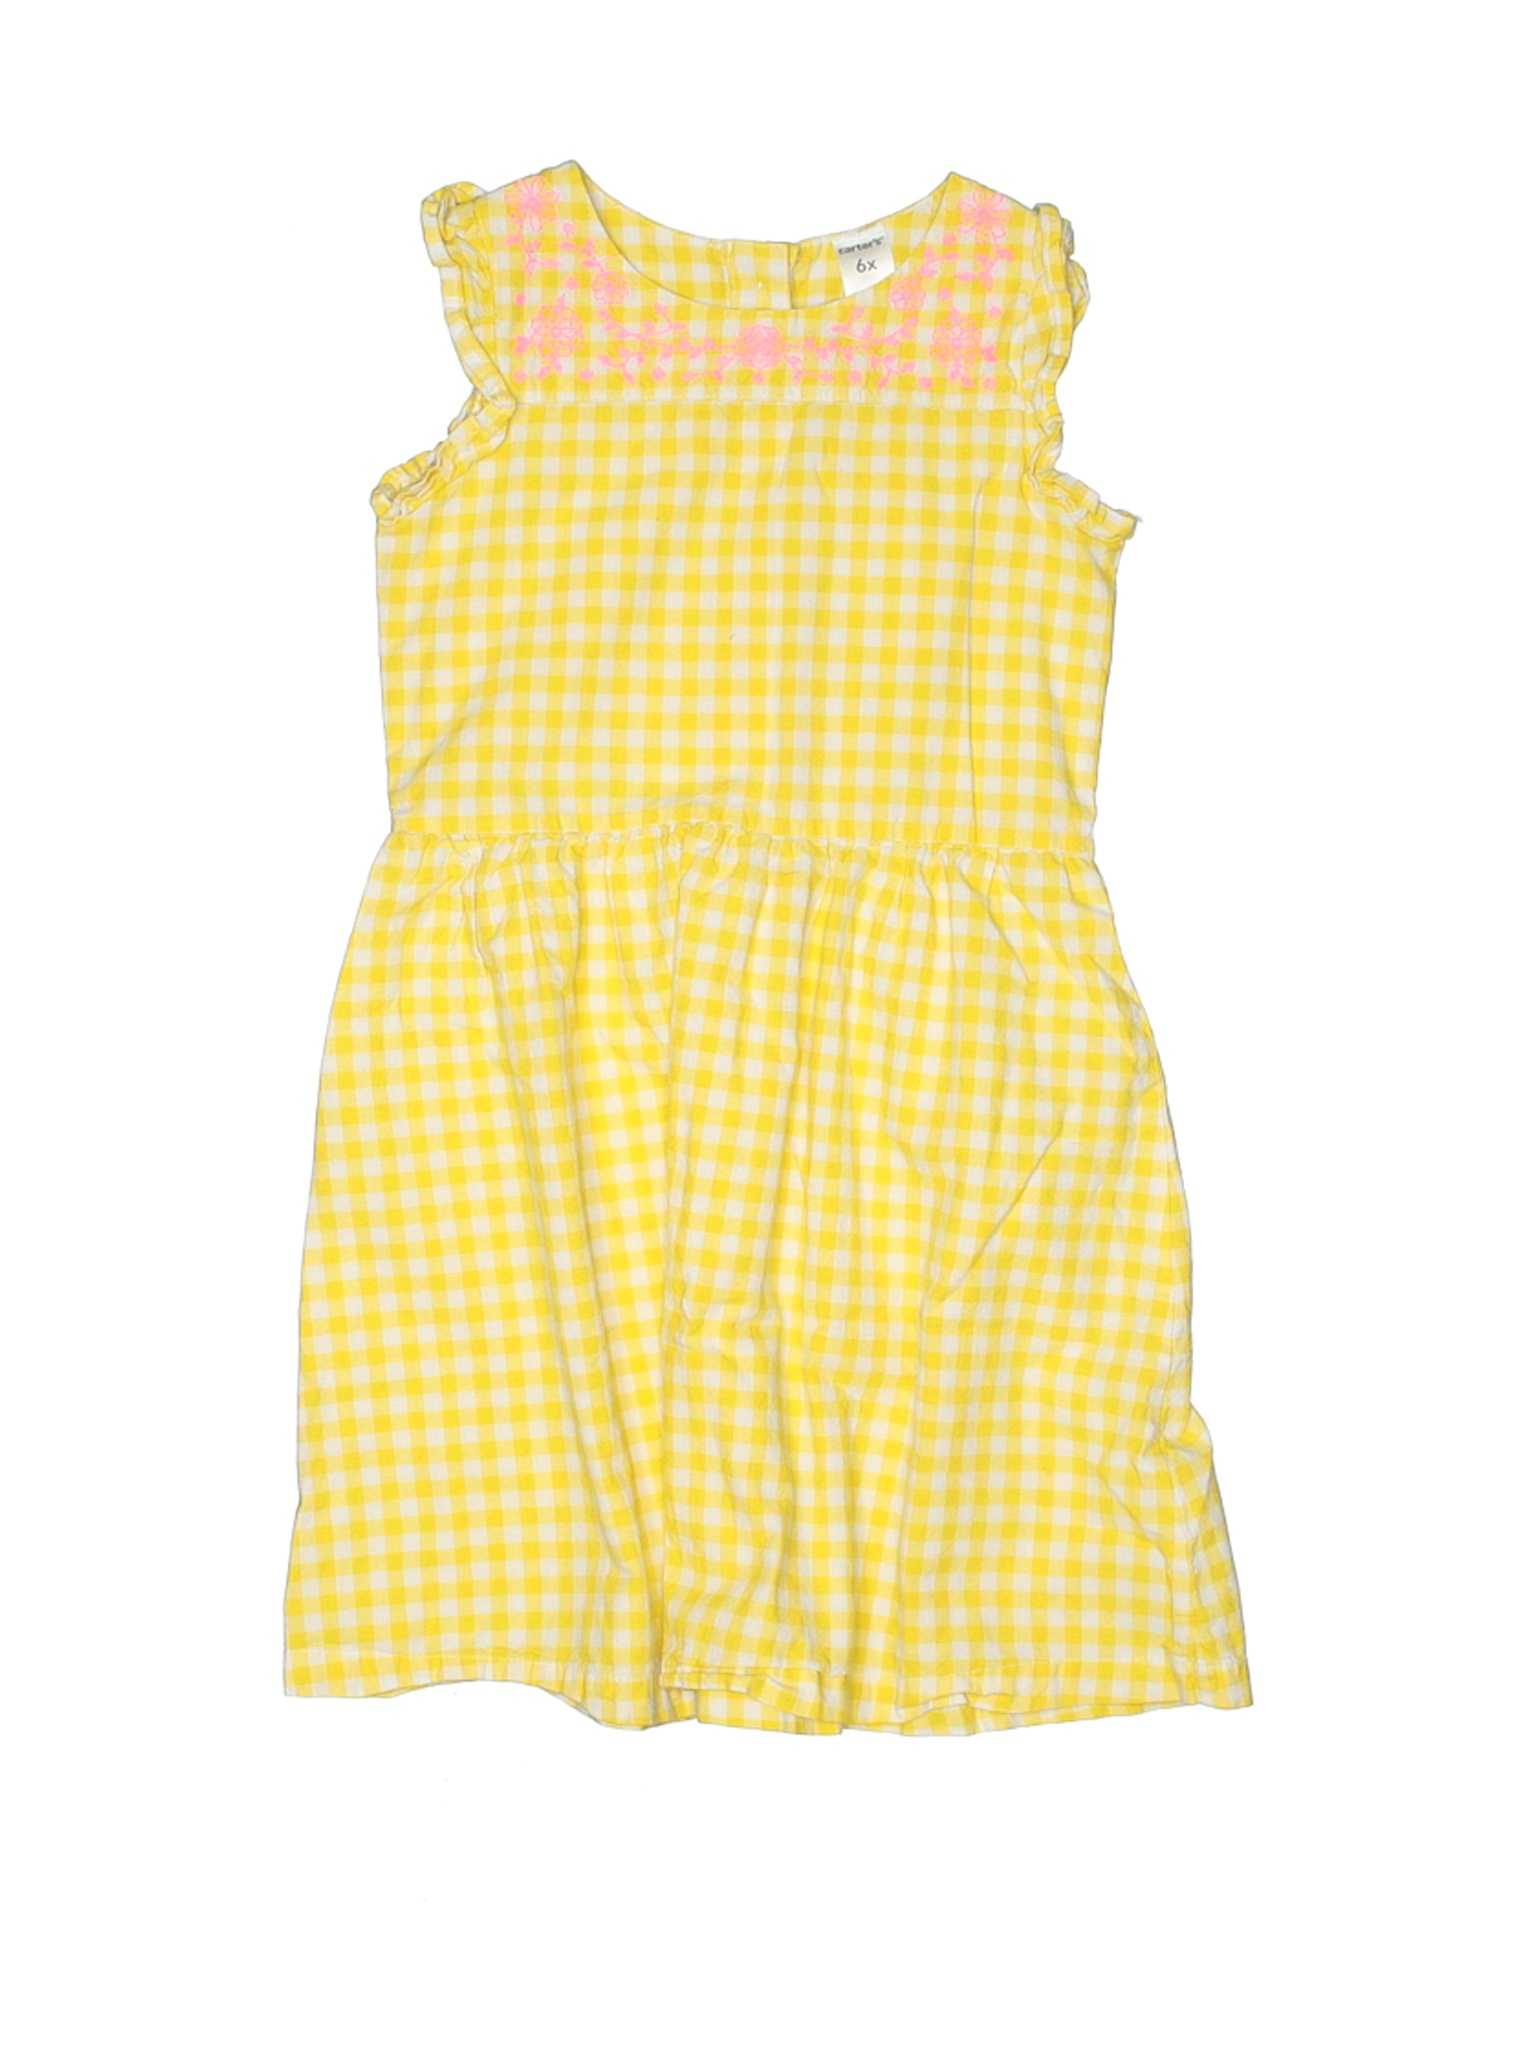 Carter's Girls Yellow Dress 6X | eBay